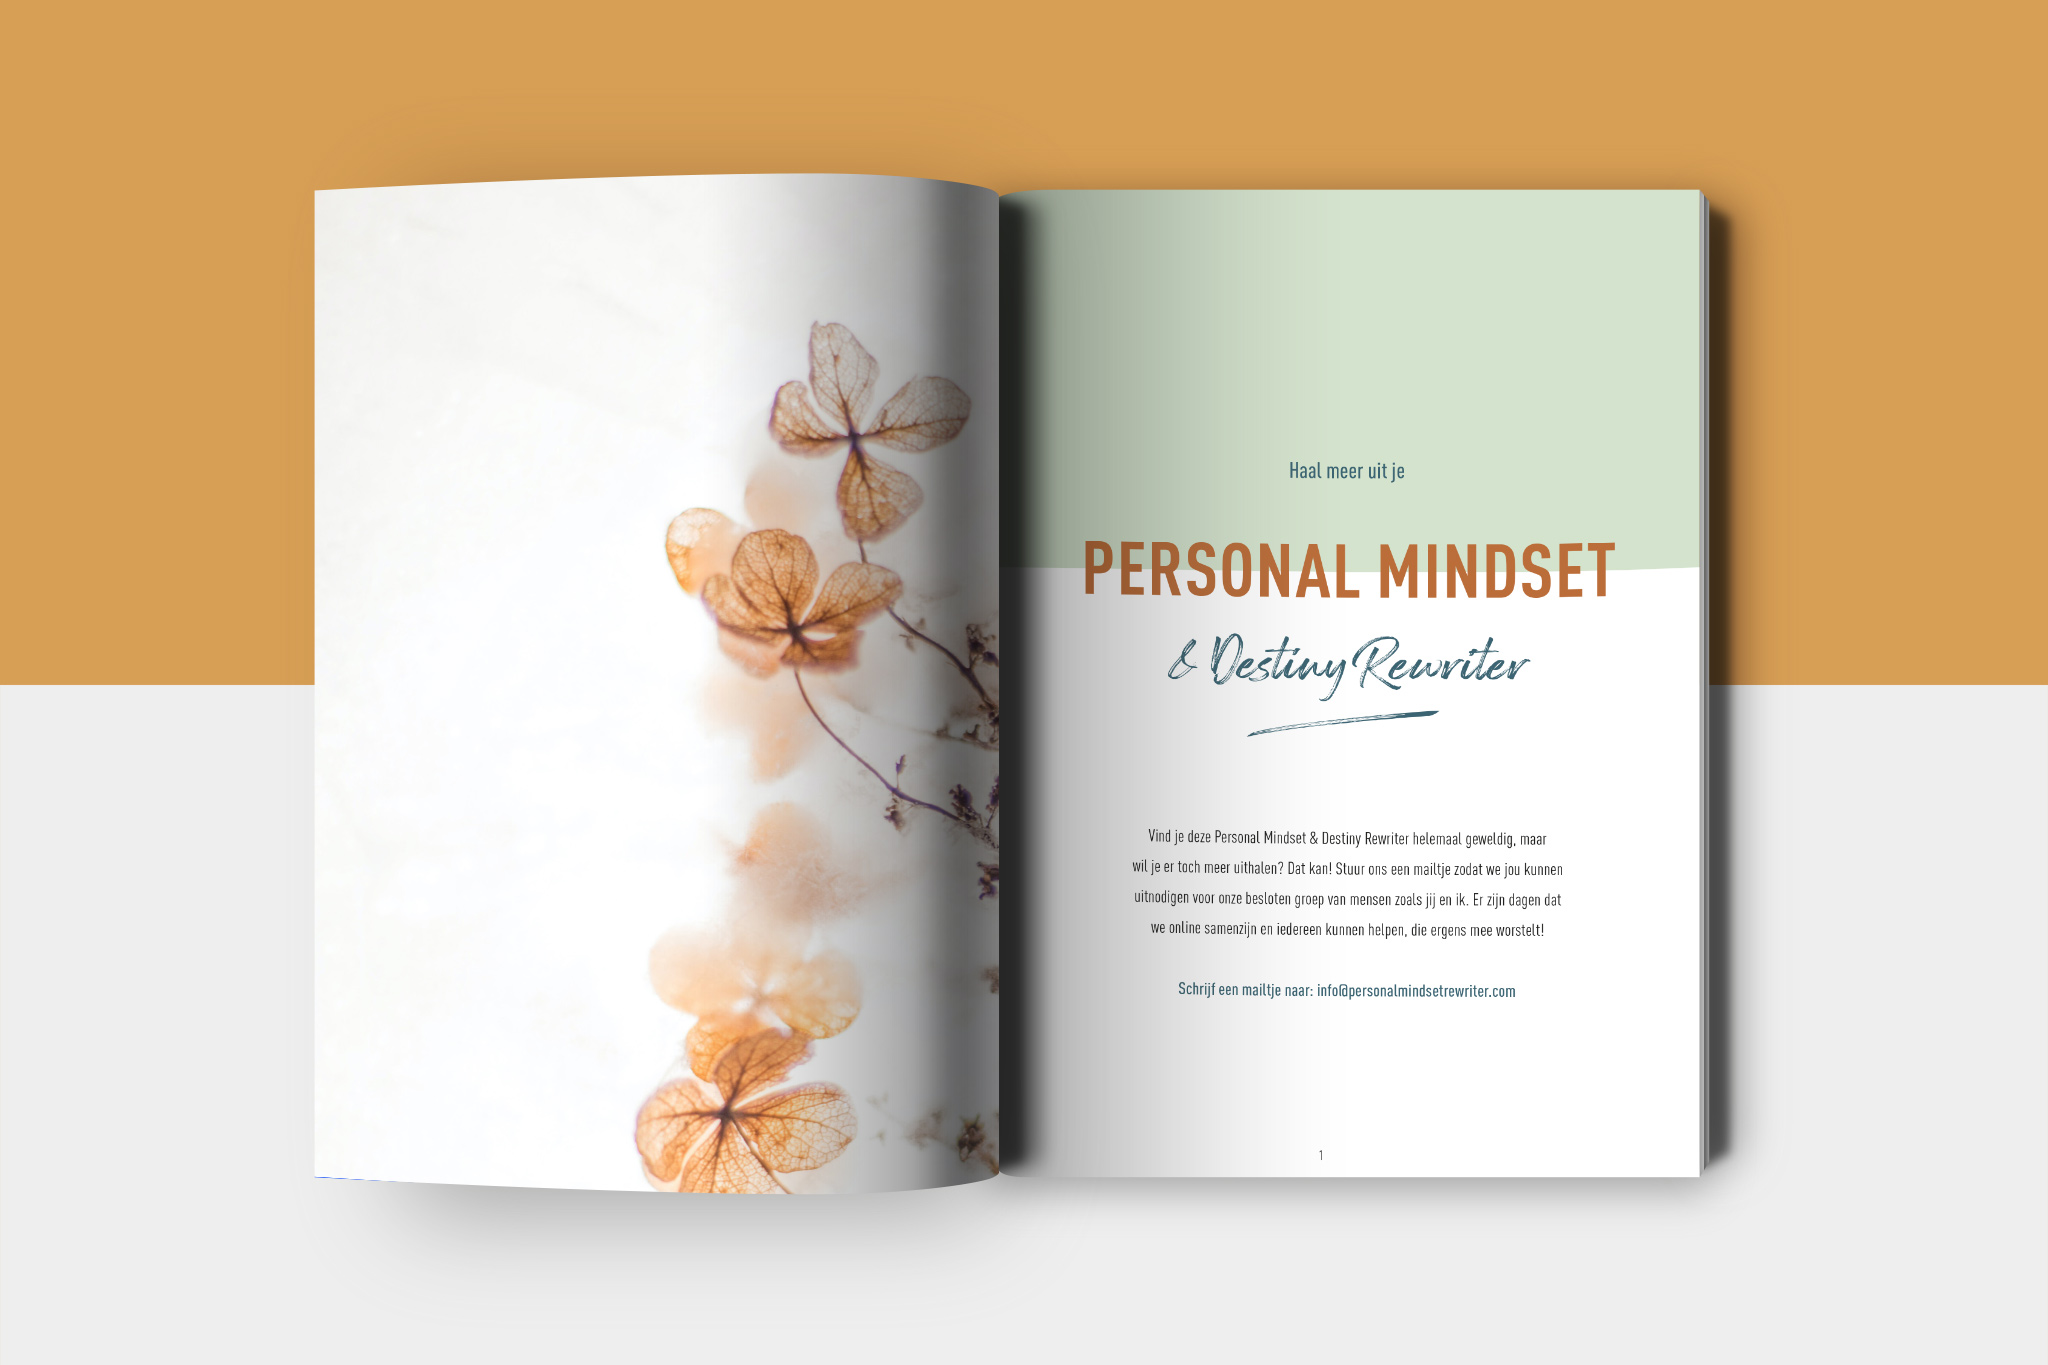 vormgeving werkboek Personal mindset & destiny rewriter